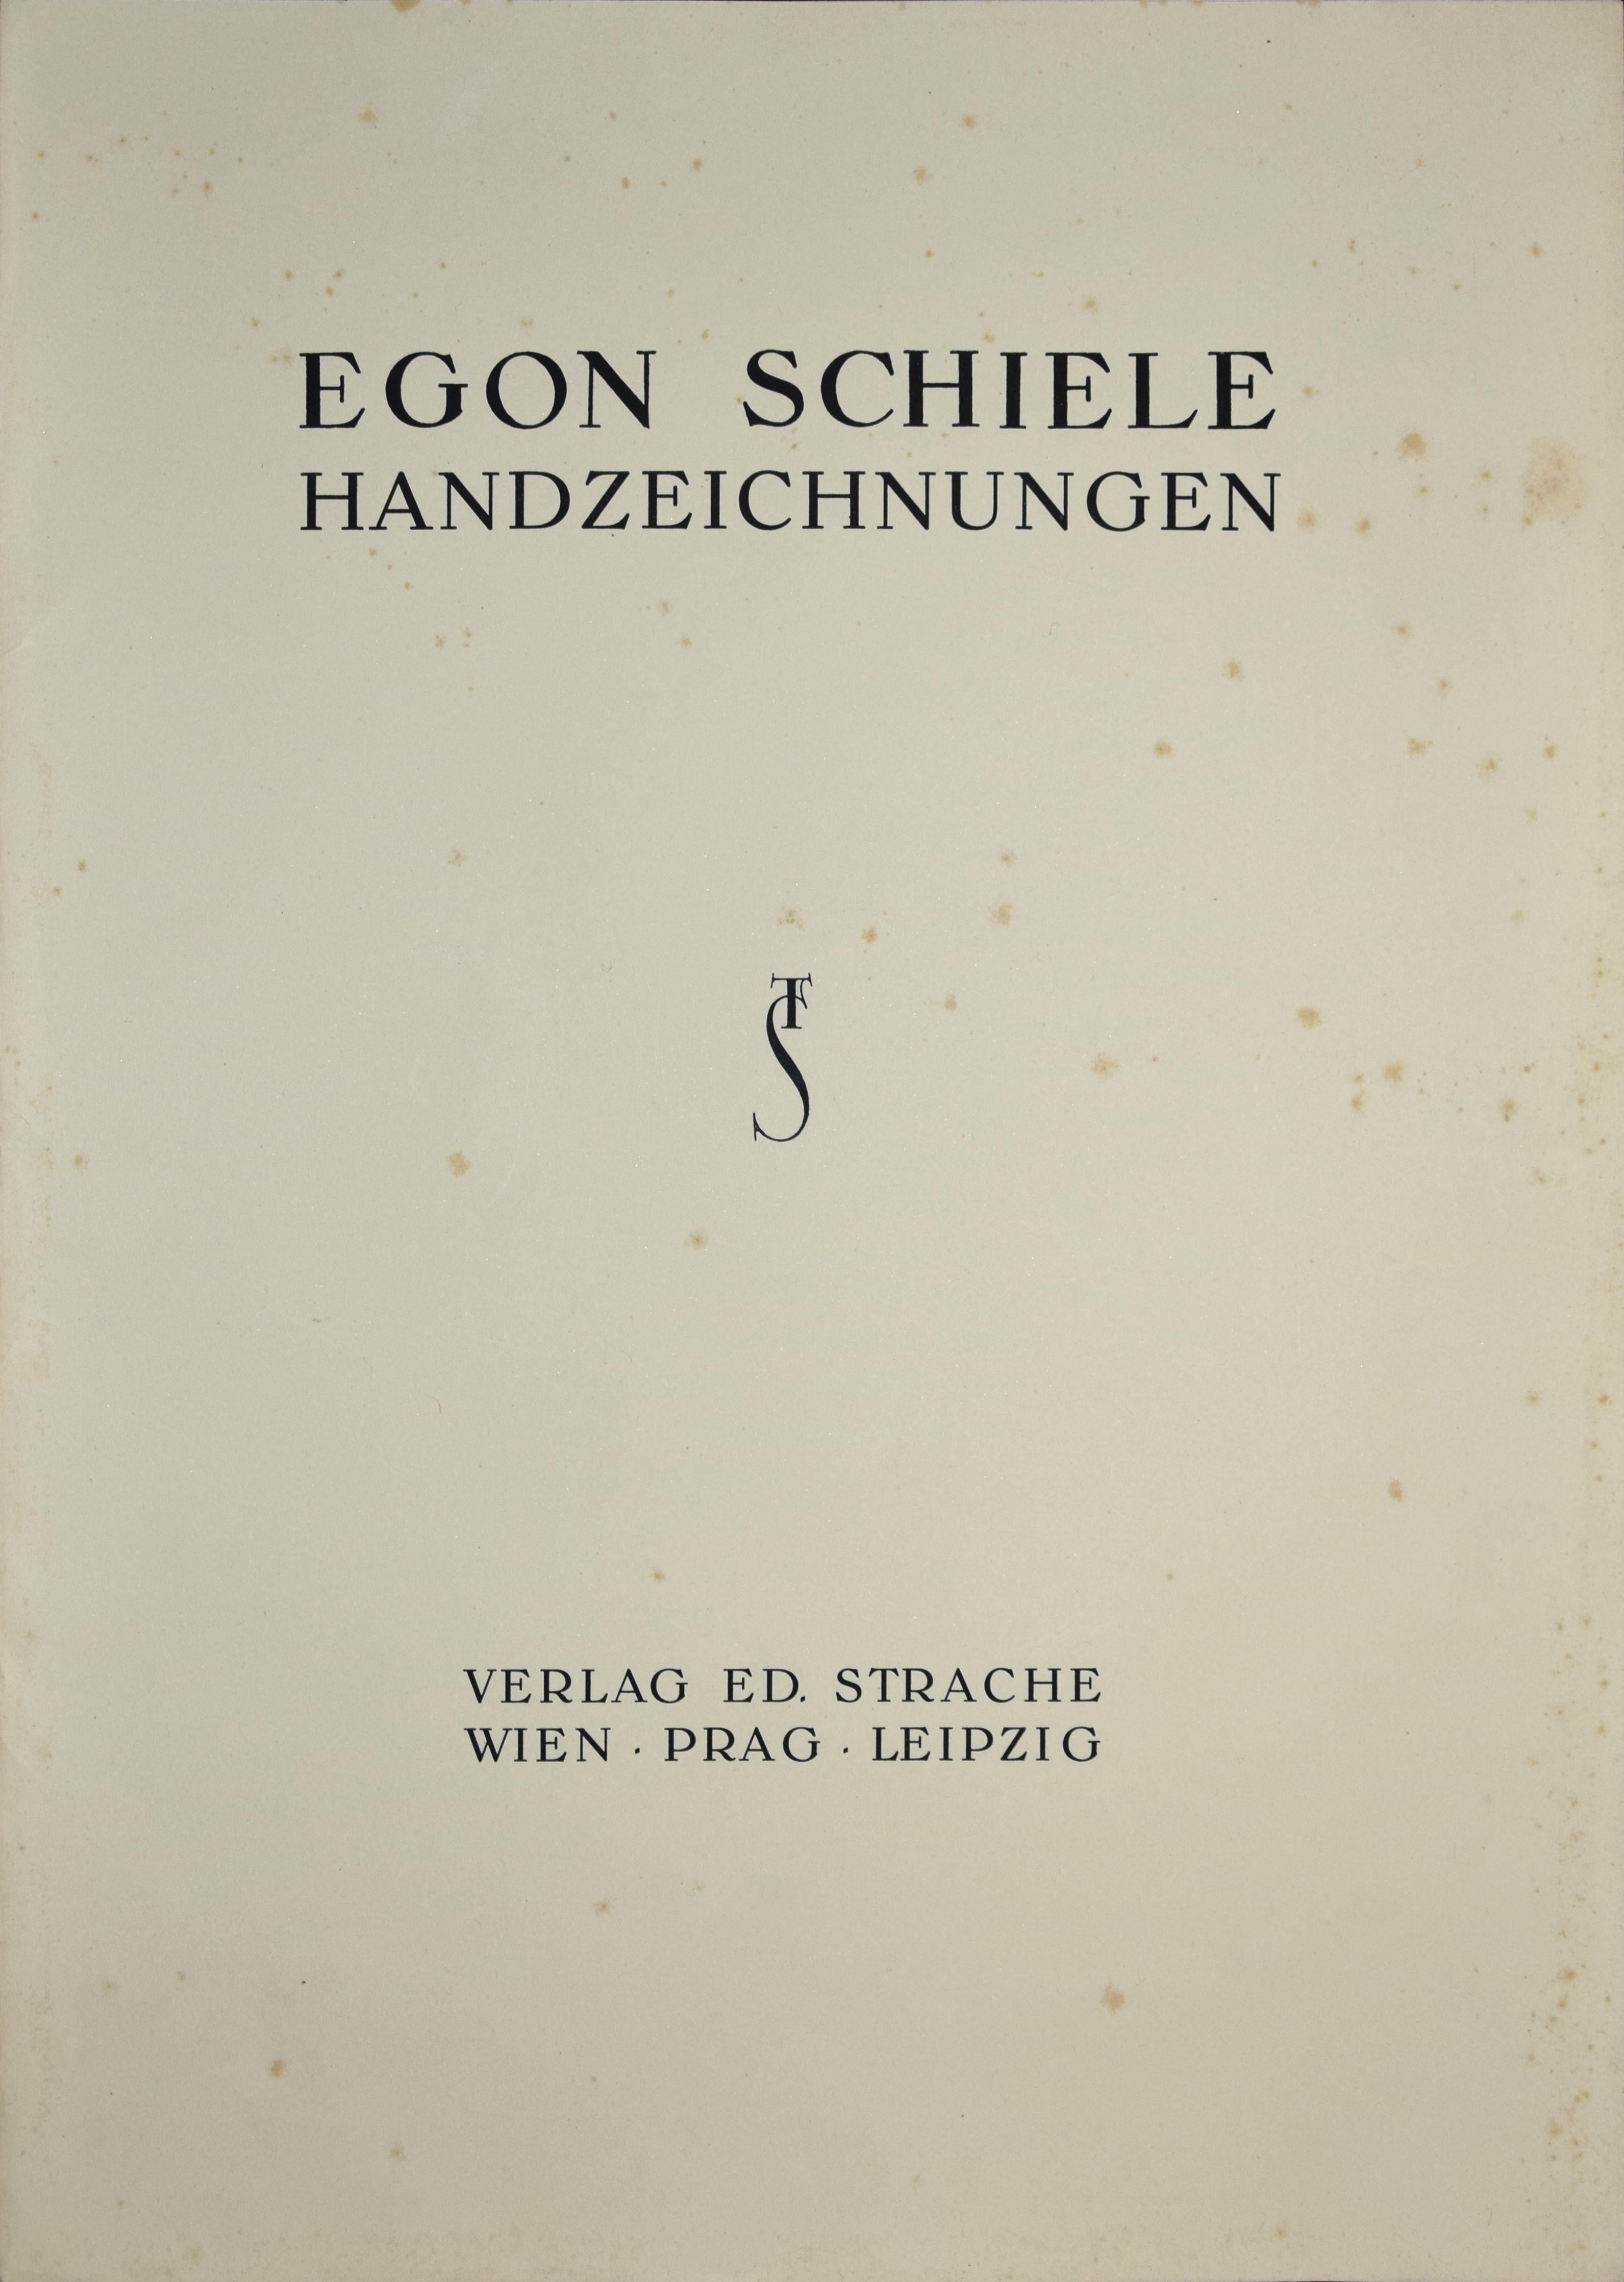 Sitting Female Nude - Original Collotype Print After Egon Schiele - 1920 1